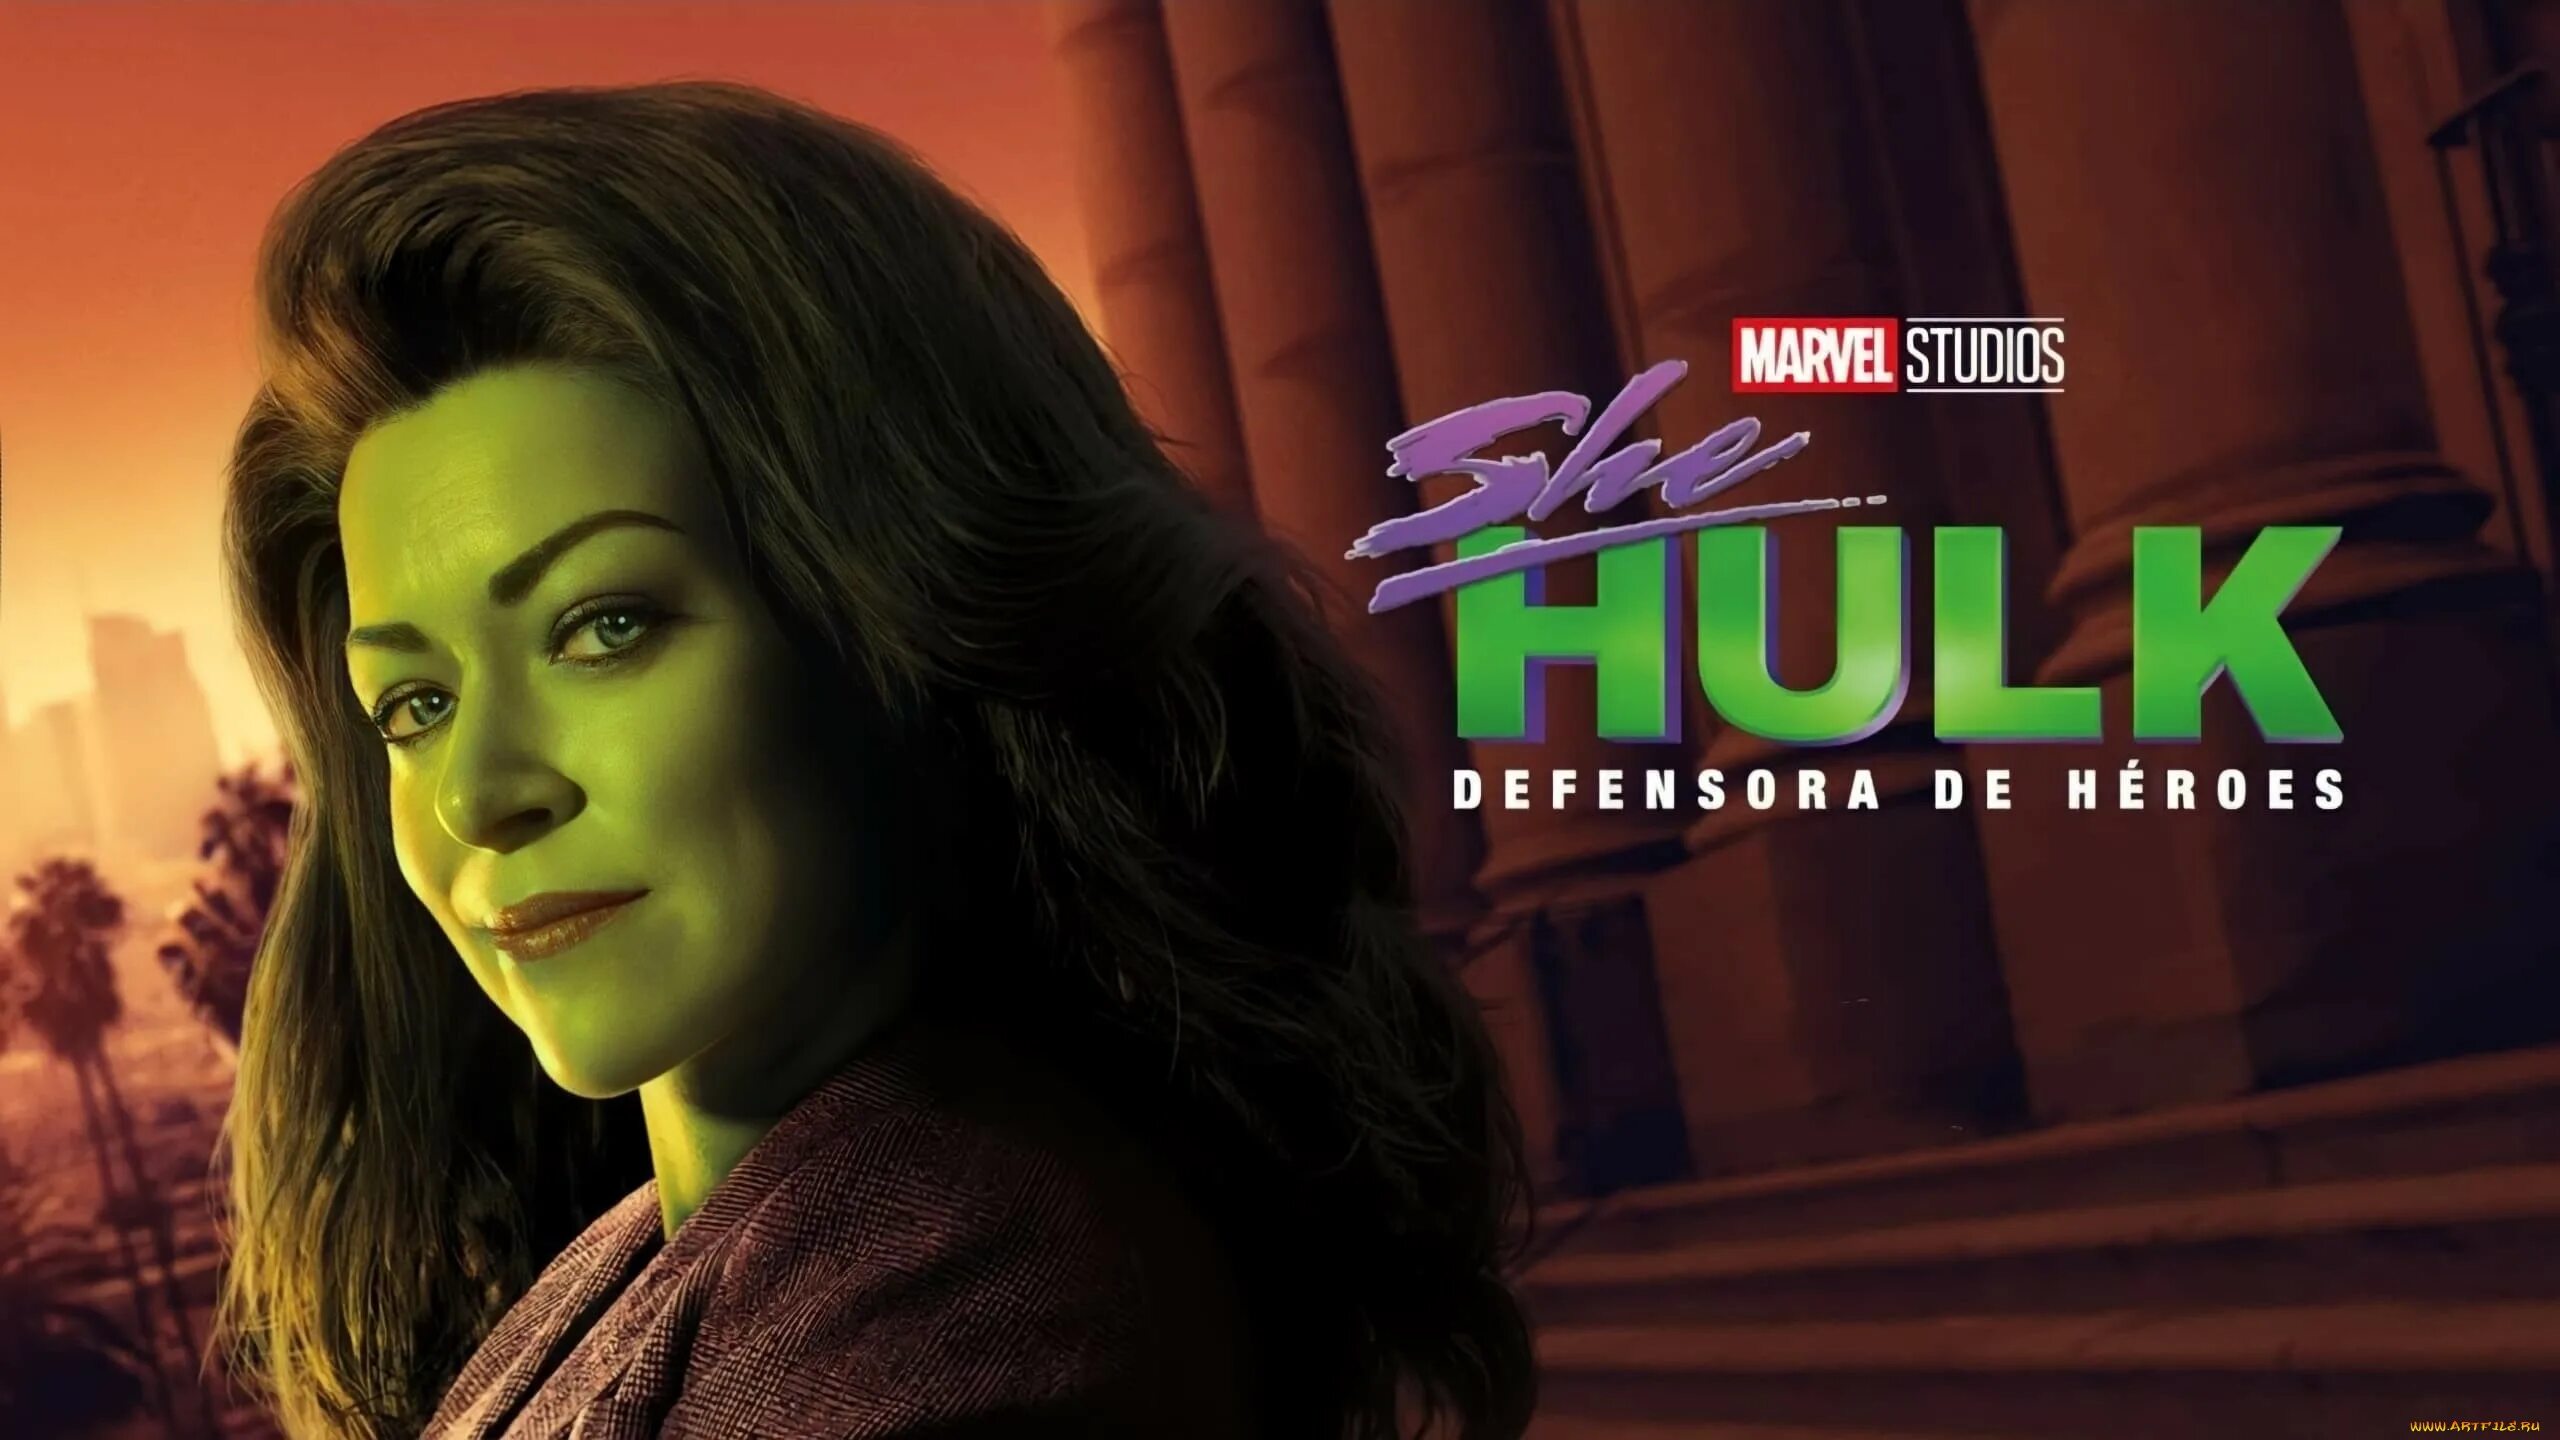 She hulk attorney at law. She Hulk 2022. She-Hulk: attorney at Law 2022. Женщина-Халк адвокат 2022.